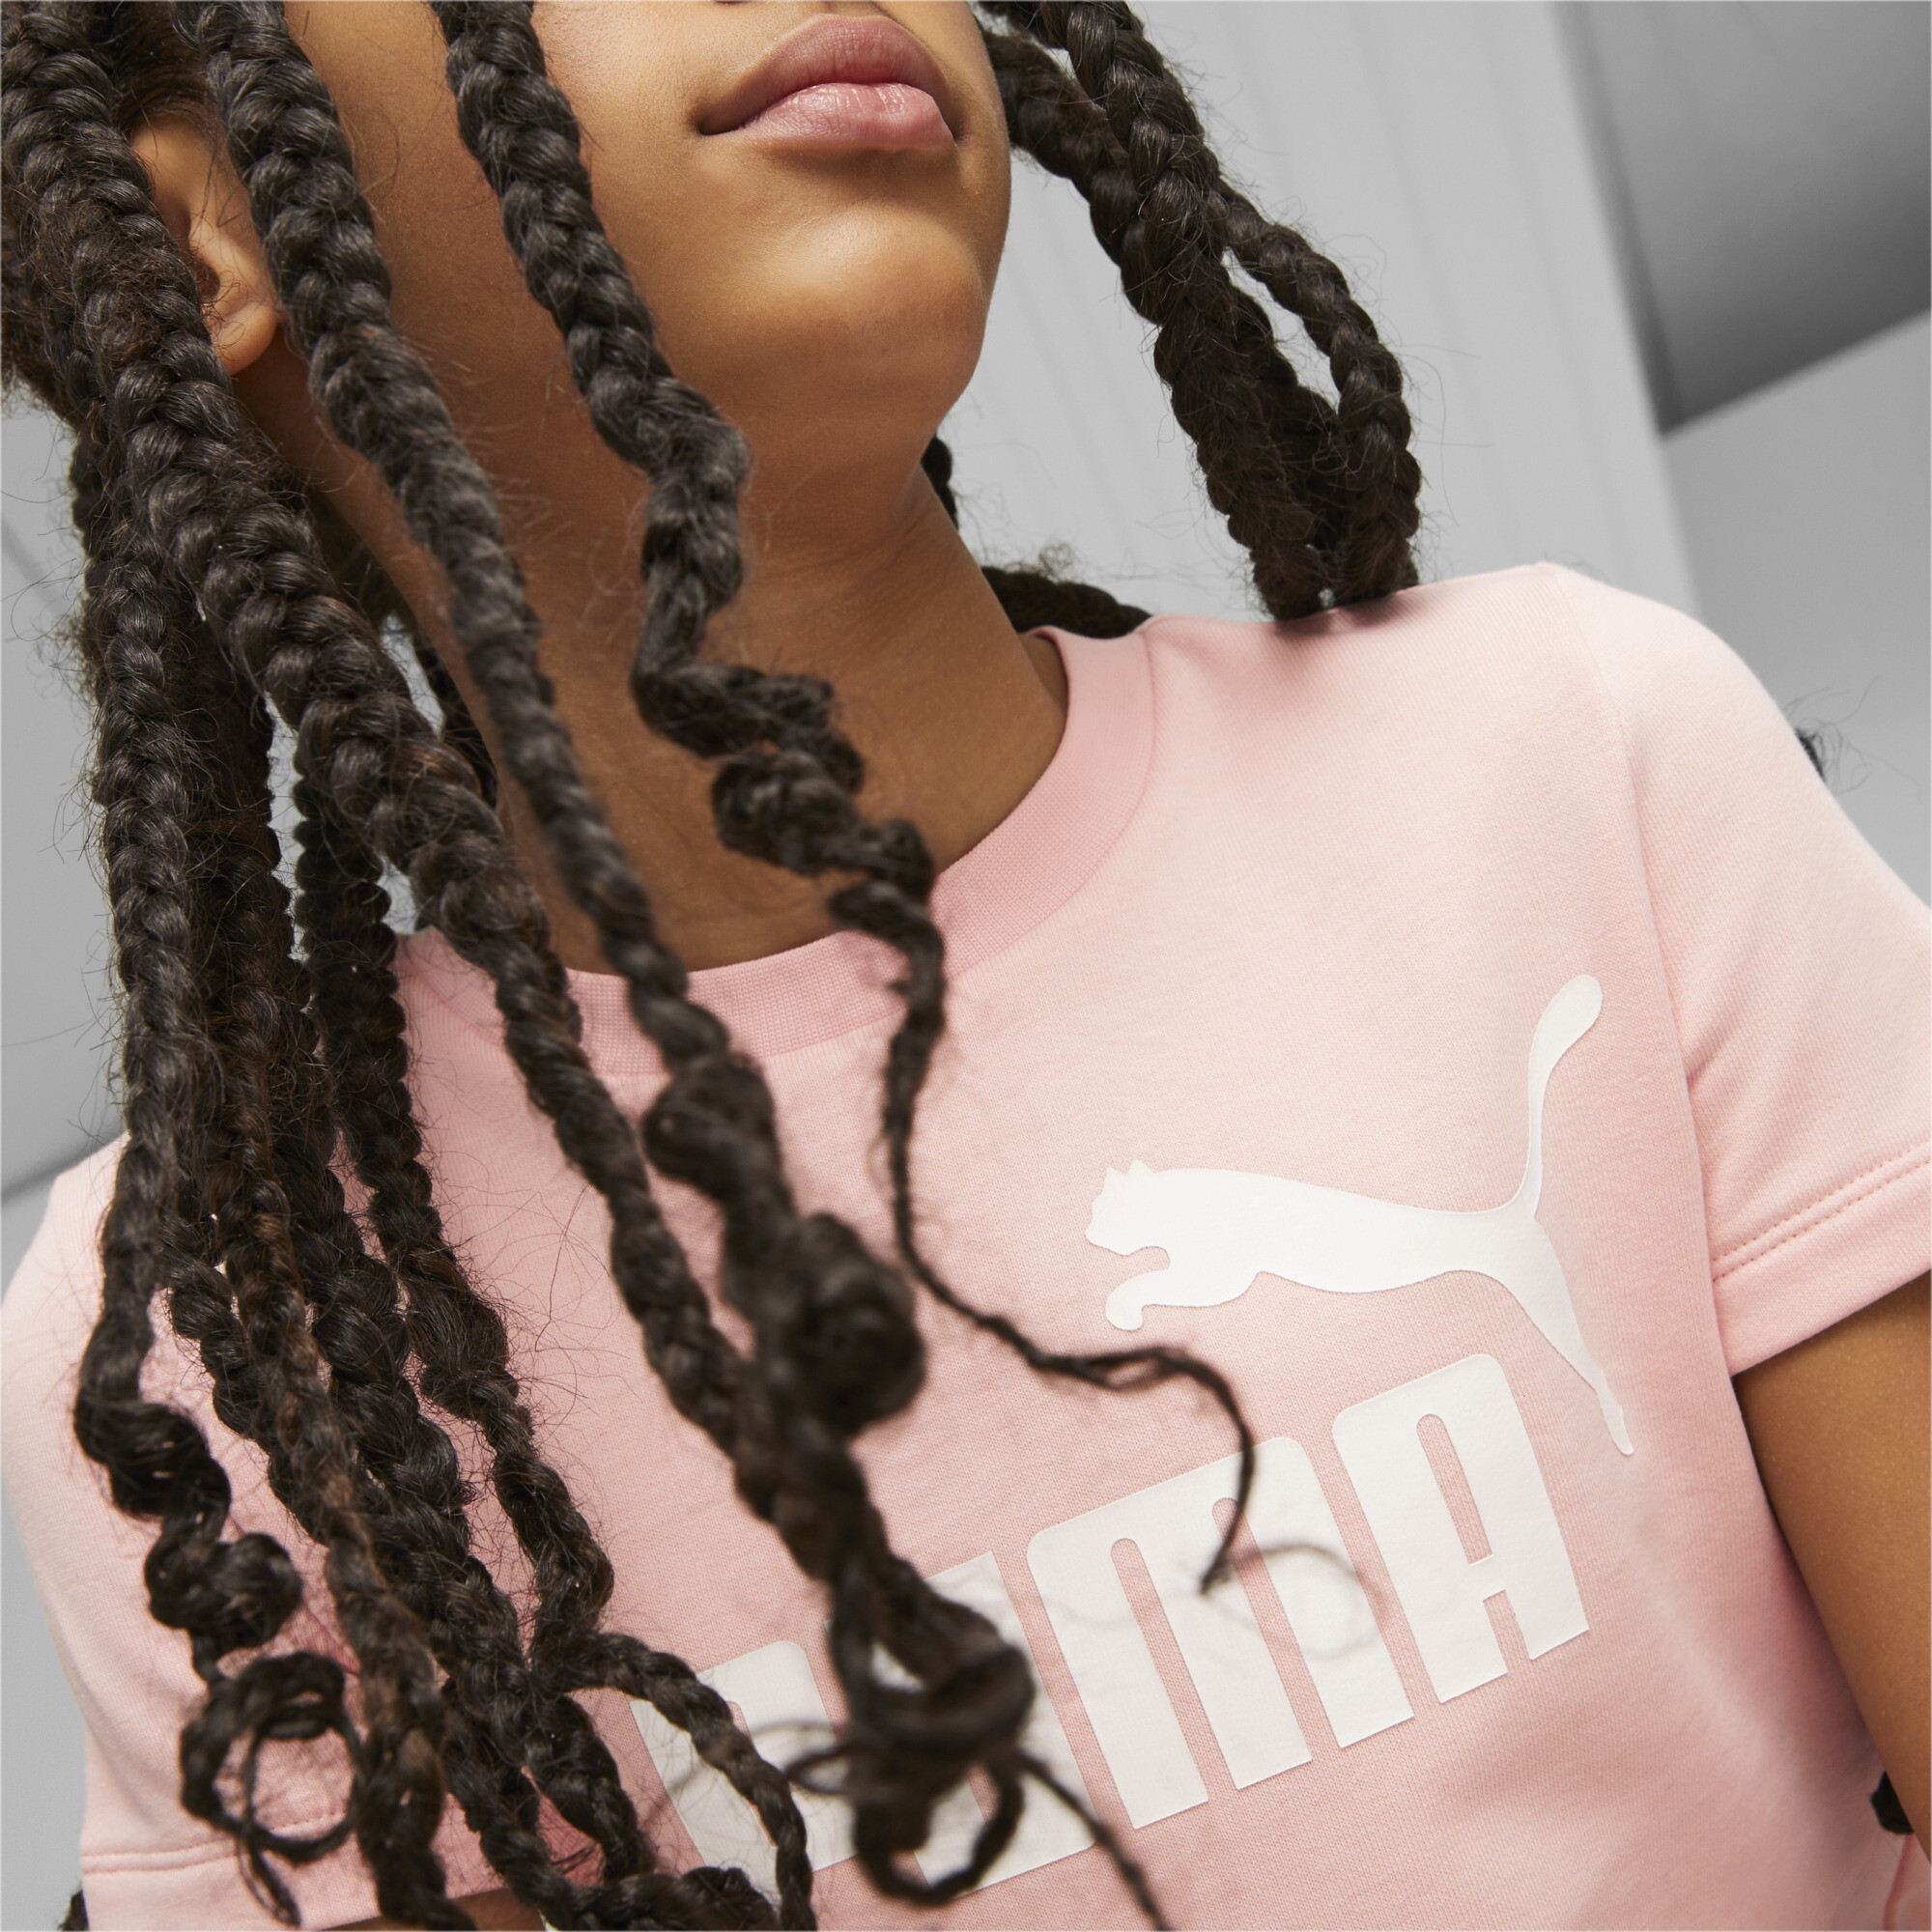 Women's Puma Essentials+ Logo Dress Youth, Pink, Size 3-4Y, Clothing